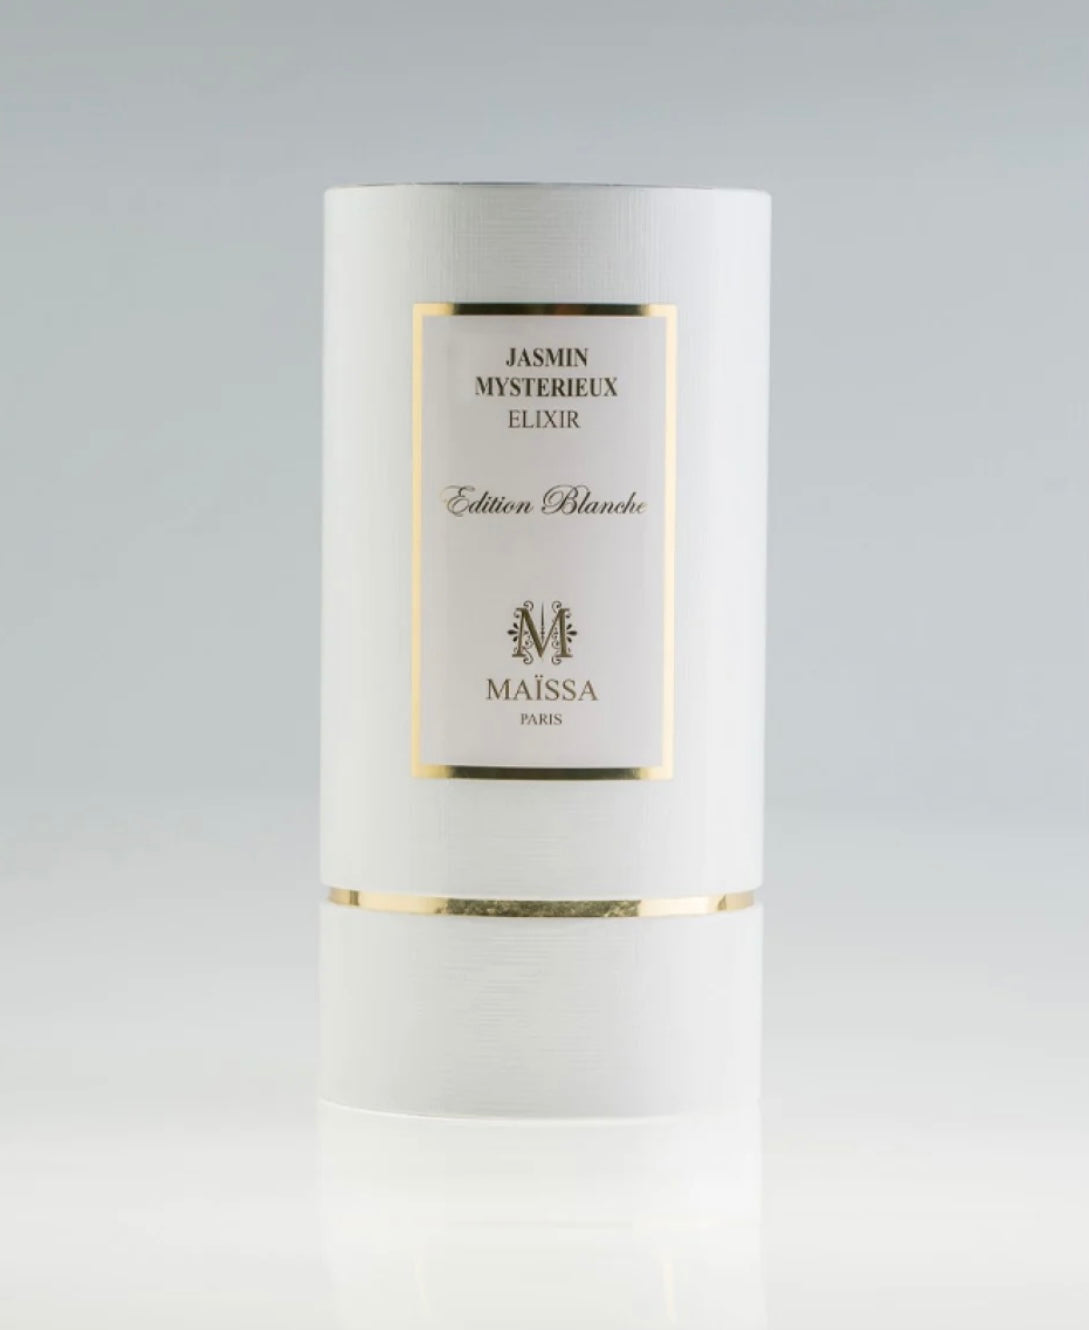 Maissa Paris Jasmin Mysterieux luxury fragrance